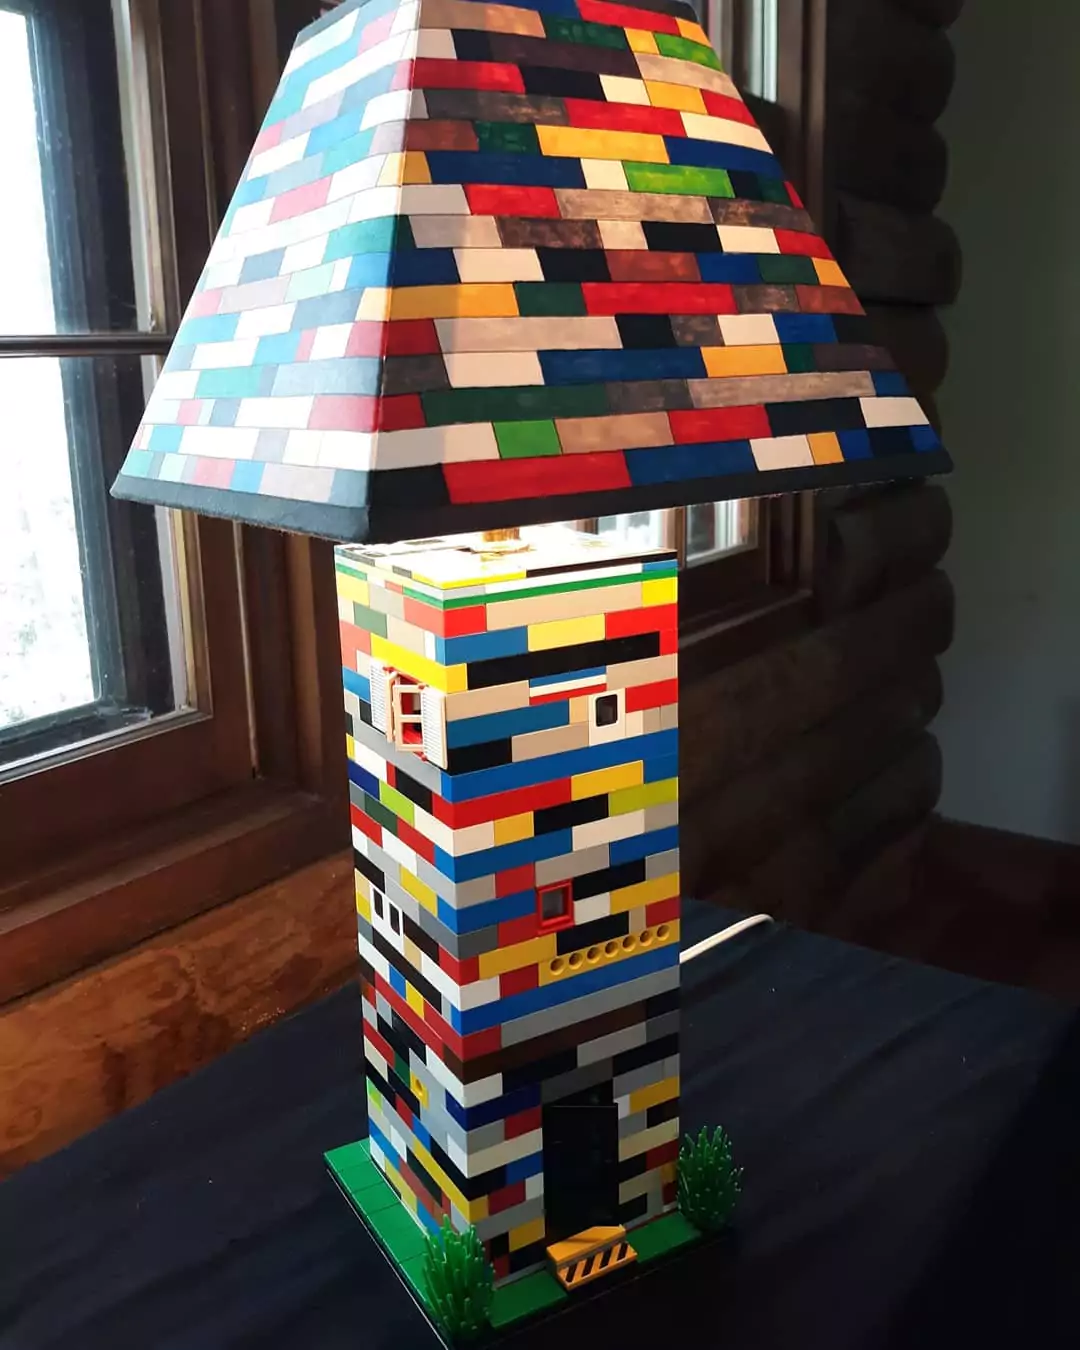 The Lego lamp